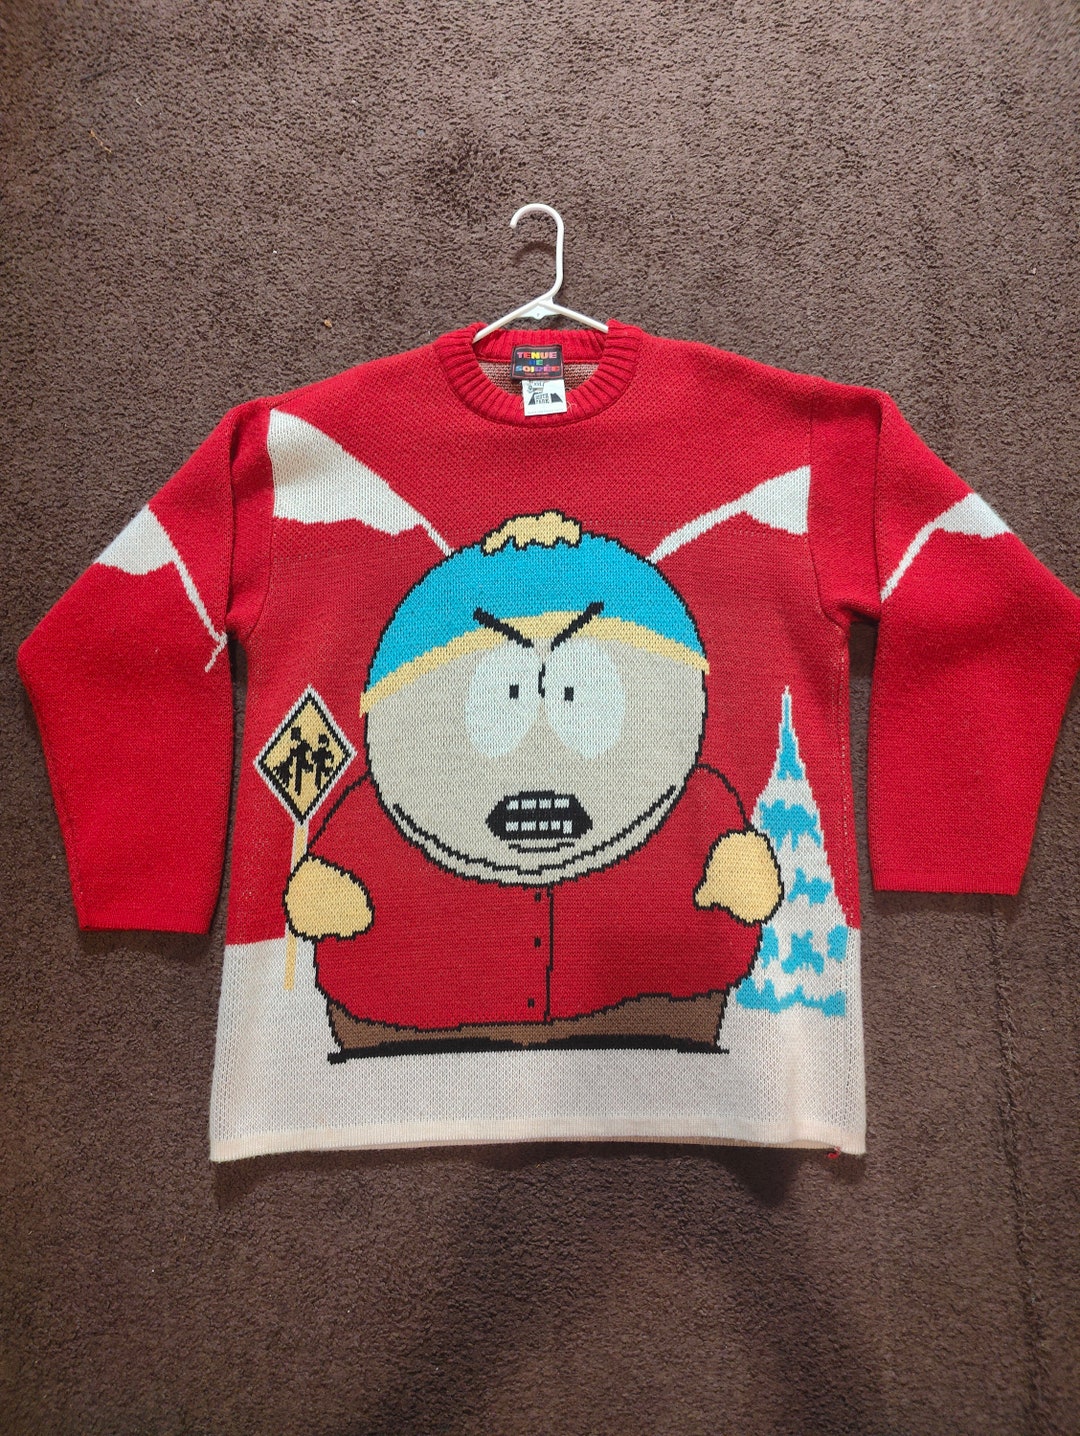 Vintage Cartman South Park Sweater - Etsy